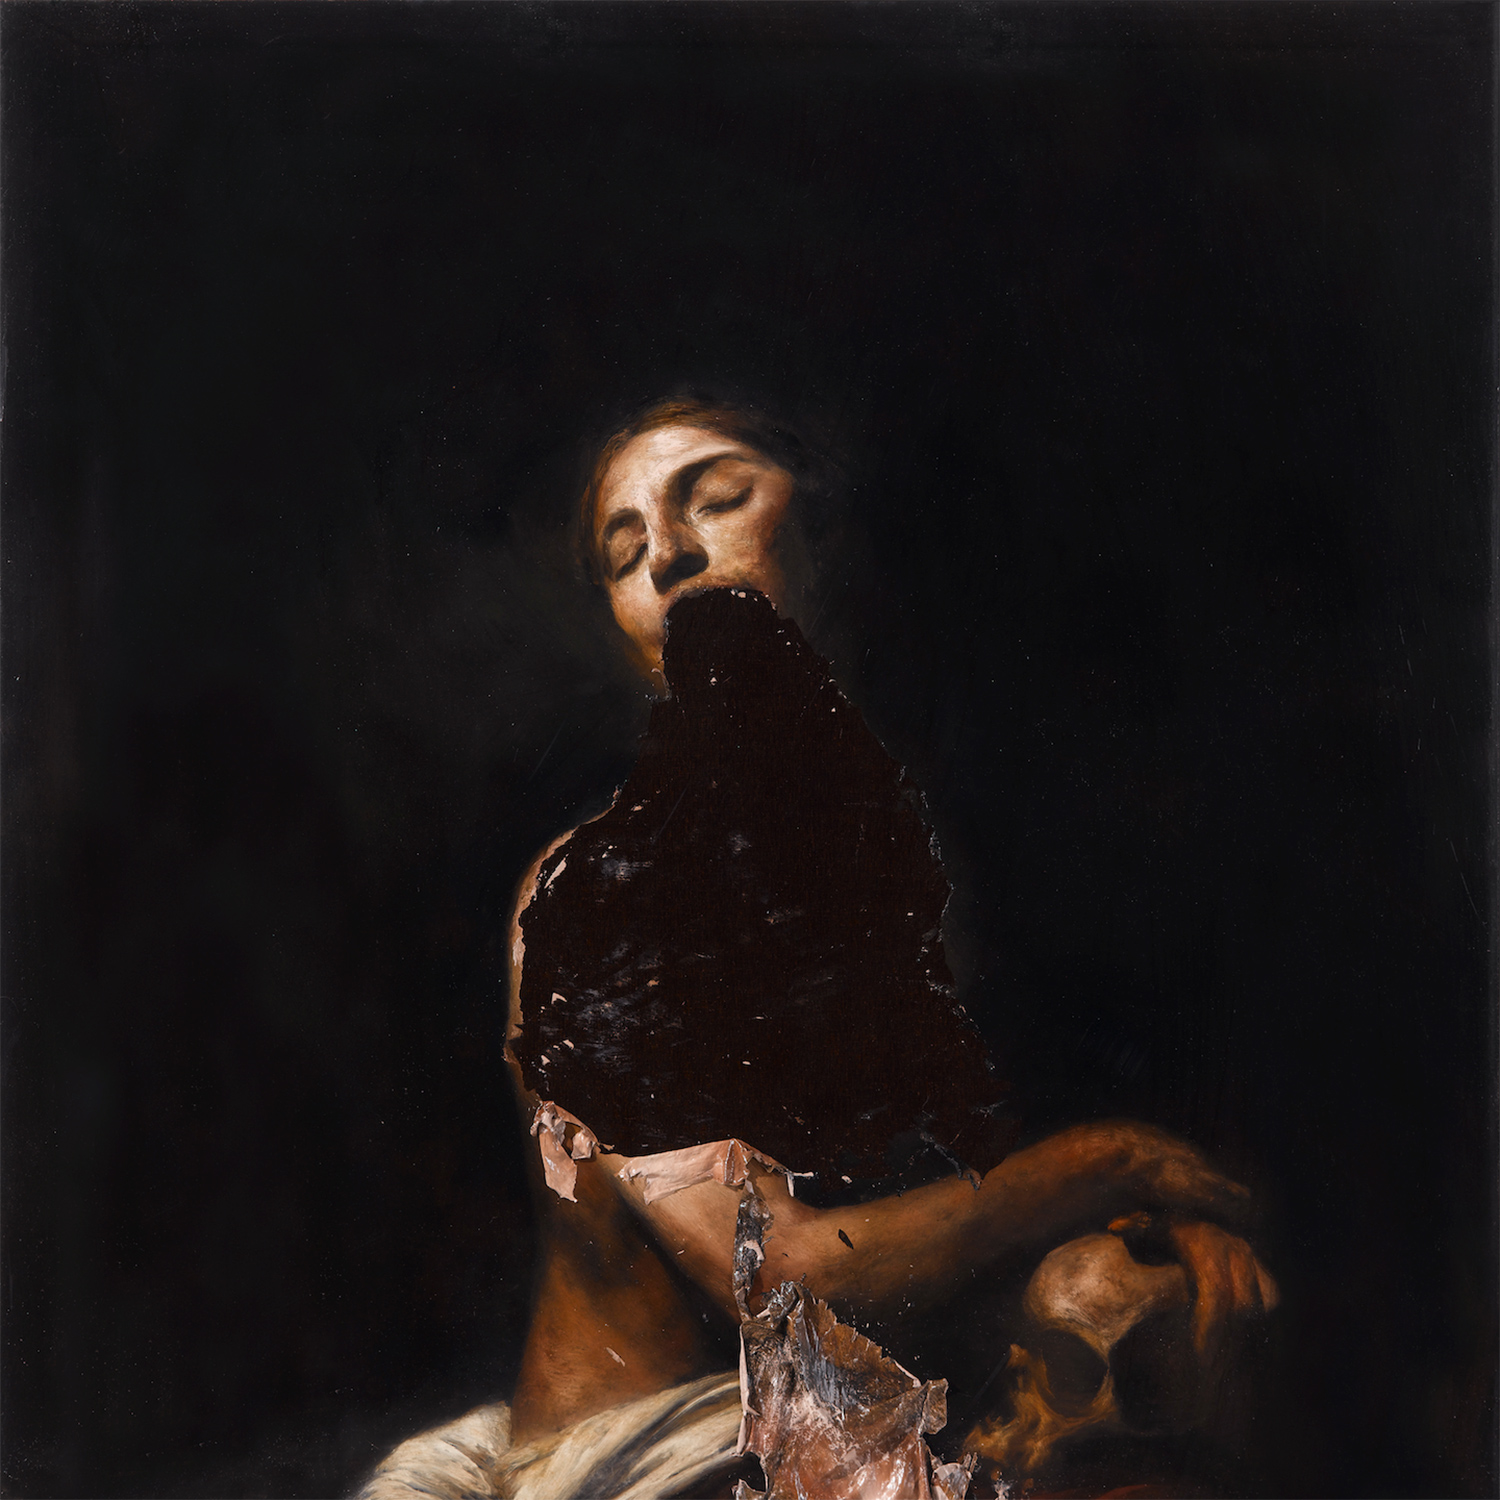 The Nature Of Fear Nicola Samori Painting Horror Baroque Portraiture Classical 1500x1500